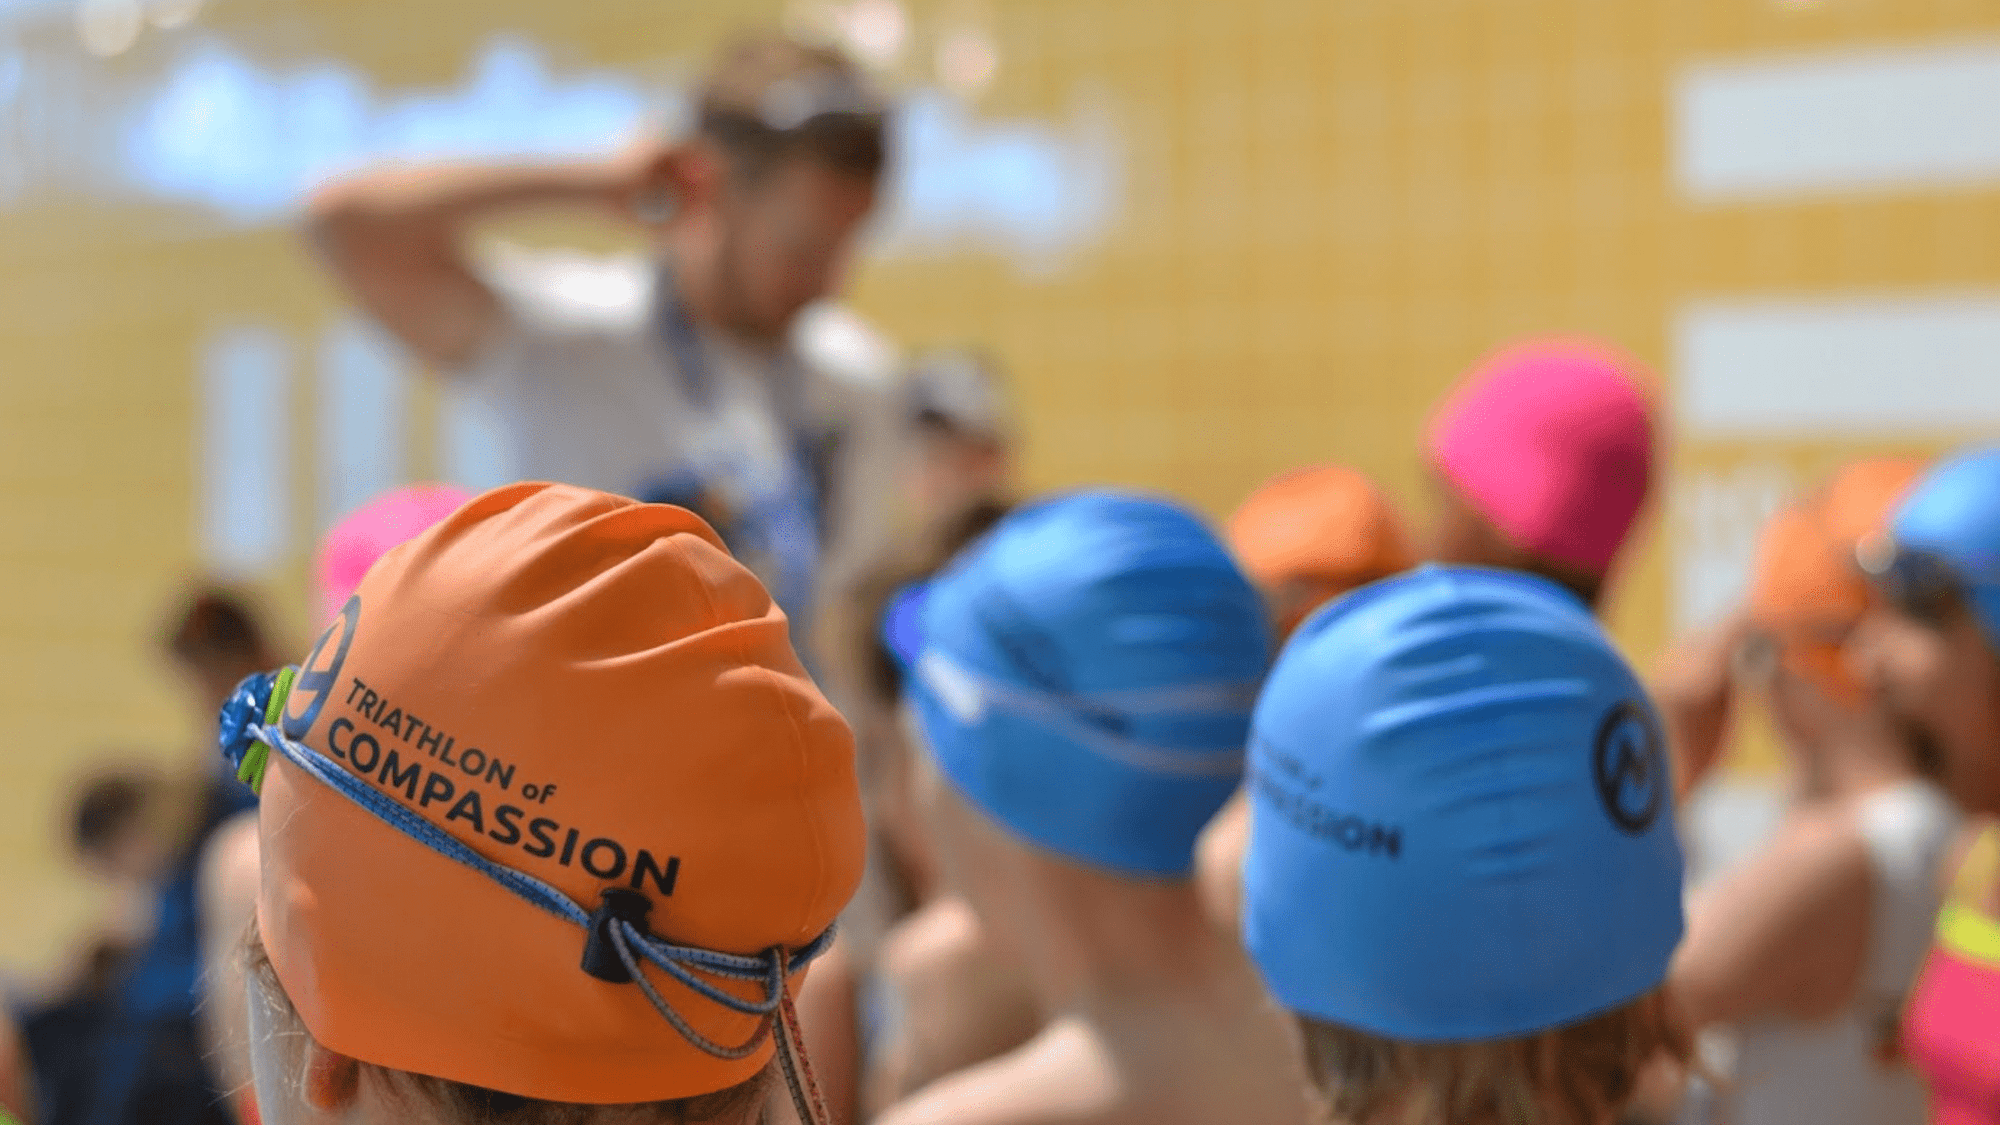 Triathlon of Compassion swim start